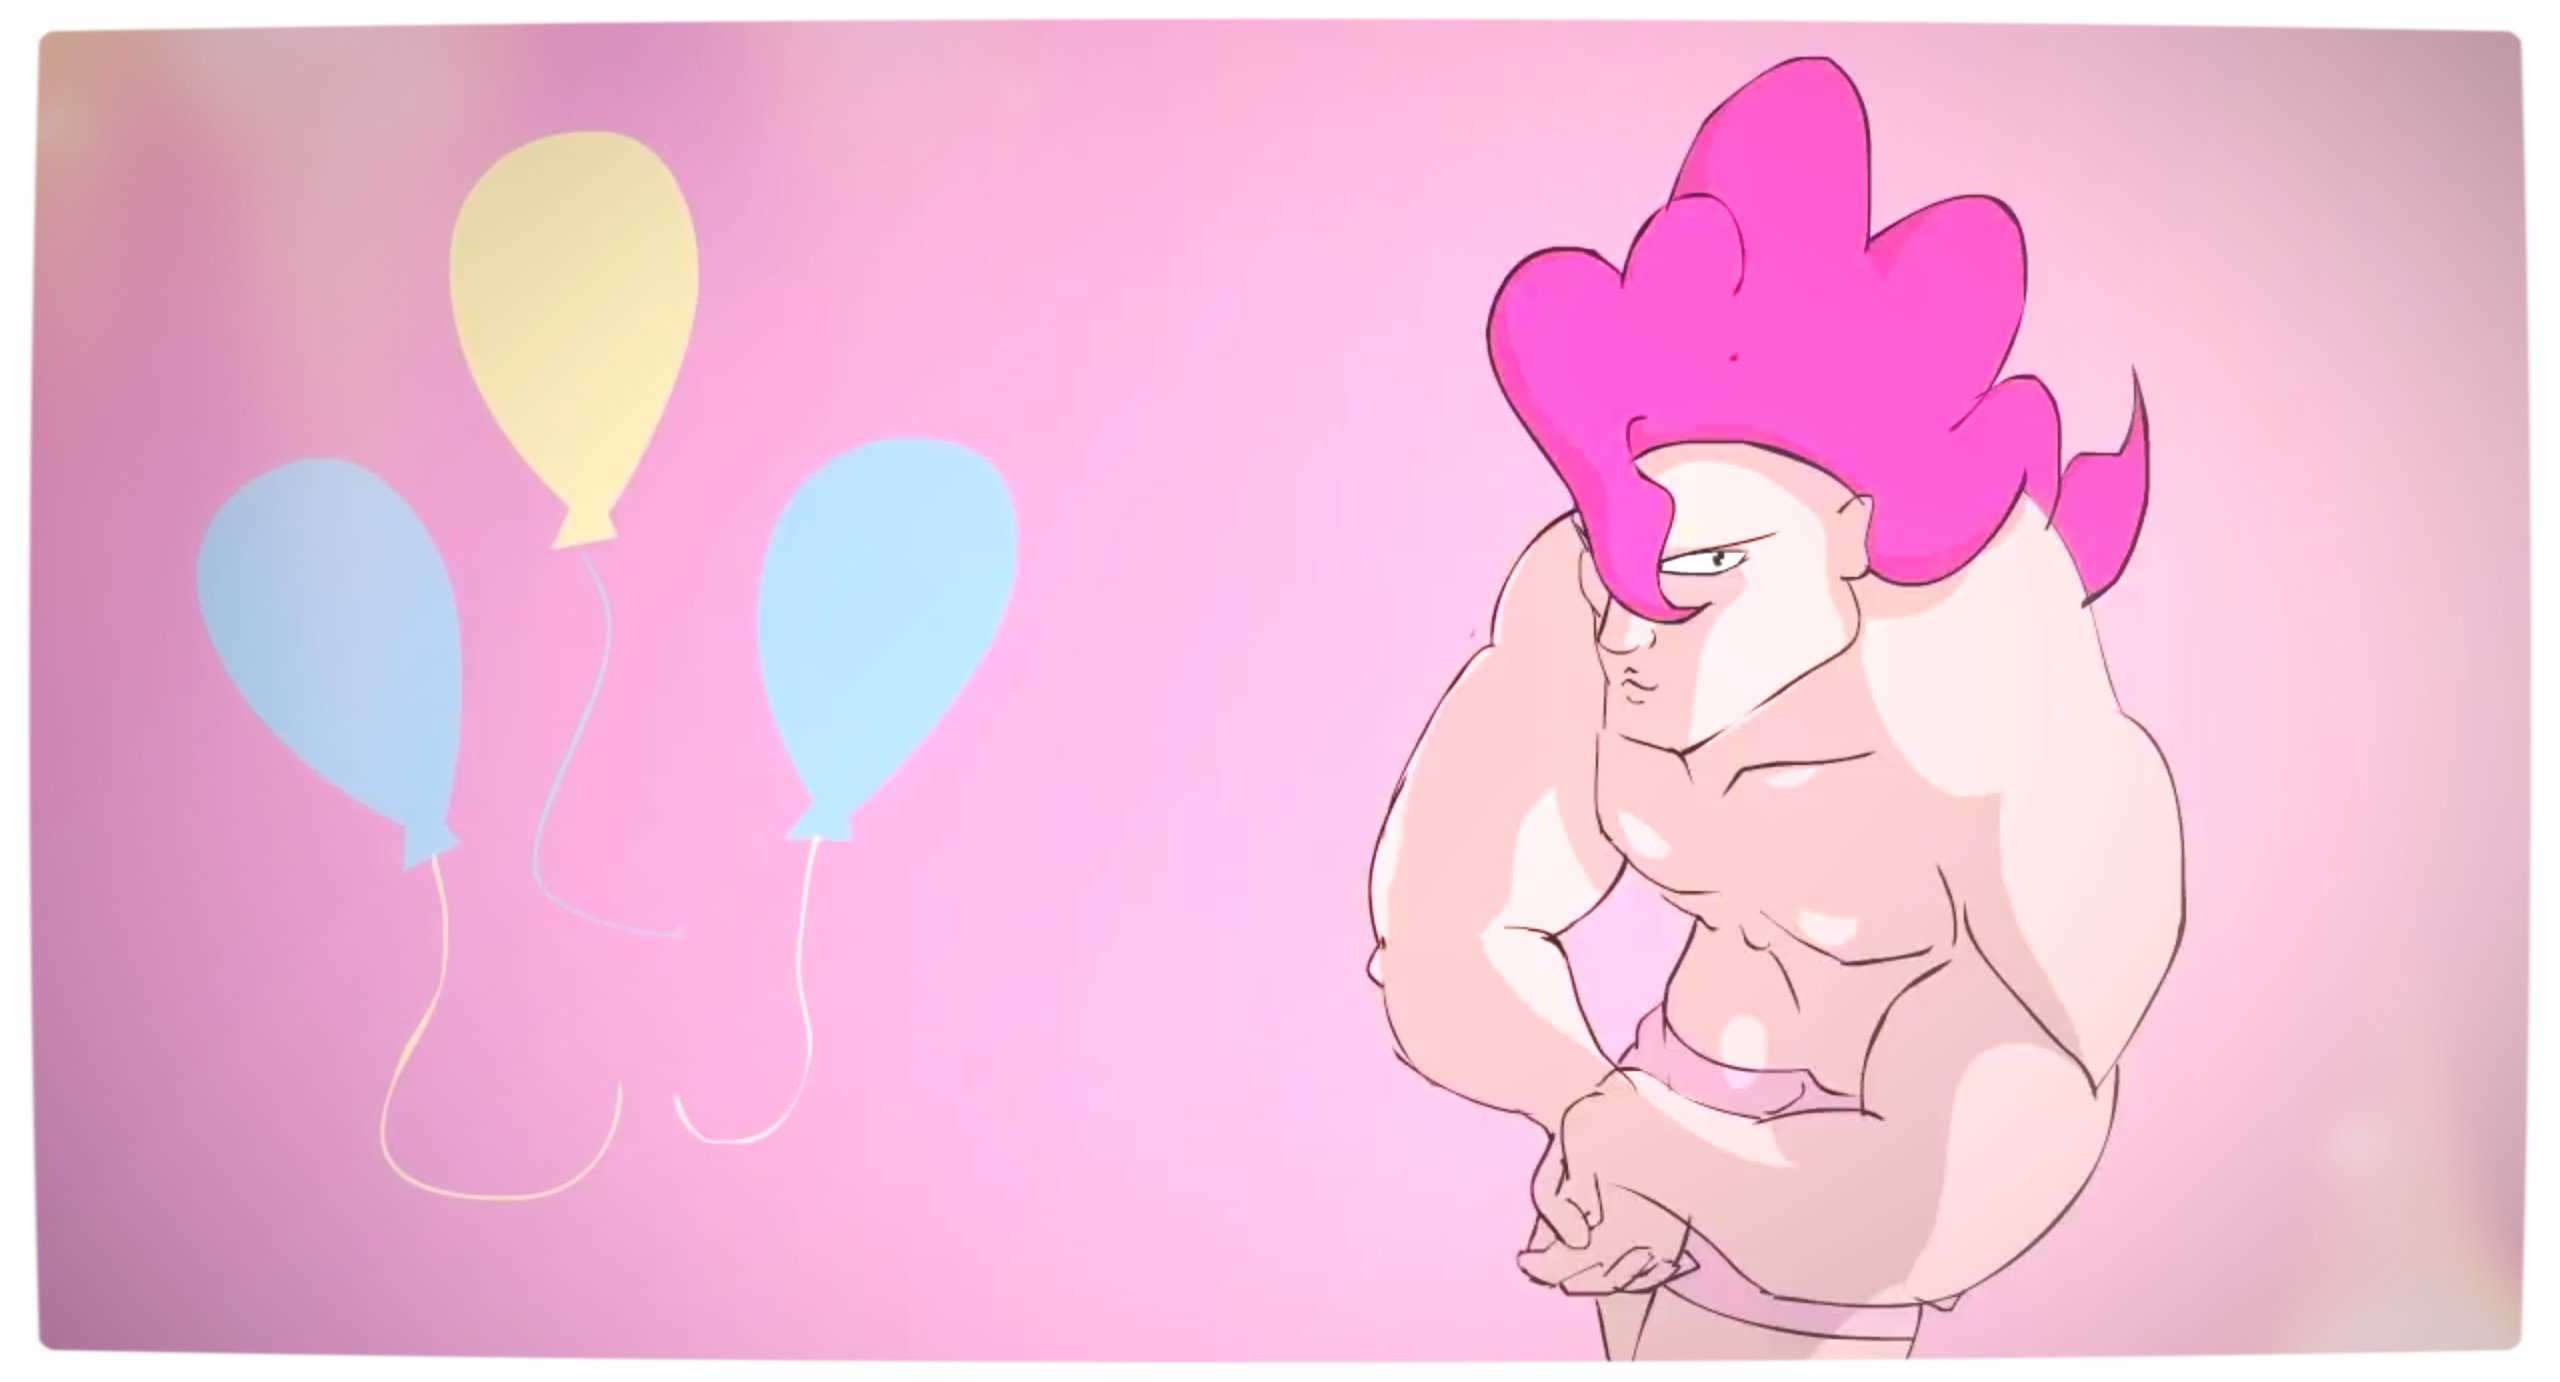 http://vamers.com/wp-content/uploads/2013/11/Vamers-Ermahgerd-My-Little-Pony-Friendship-is-Manly-Bodybuilder-Bro-Pinkie-Pie.jpg